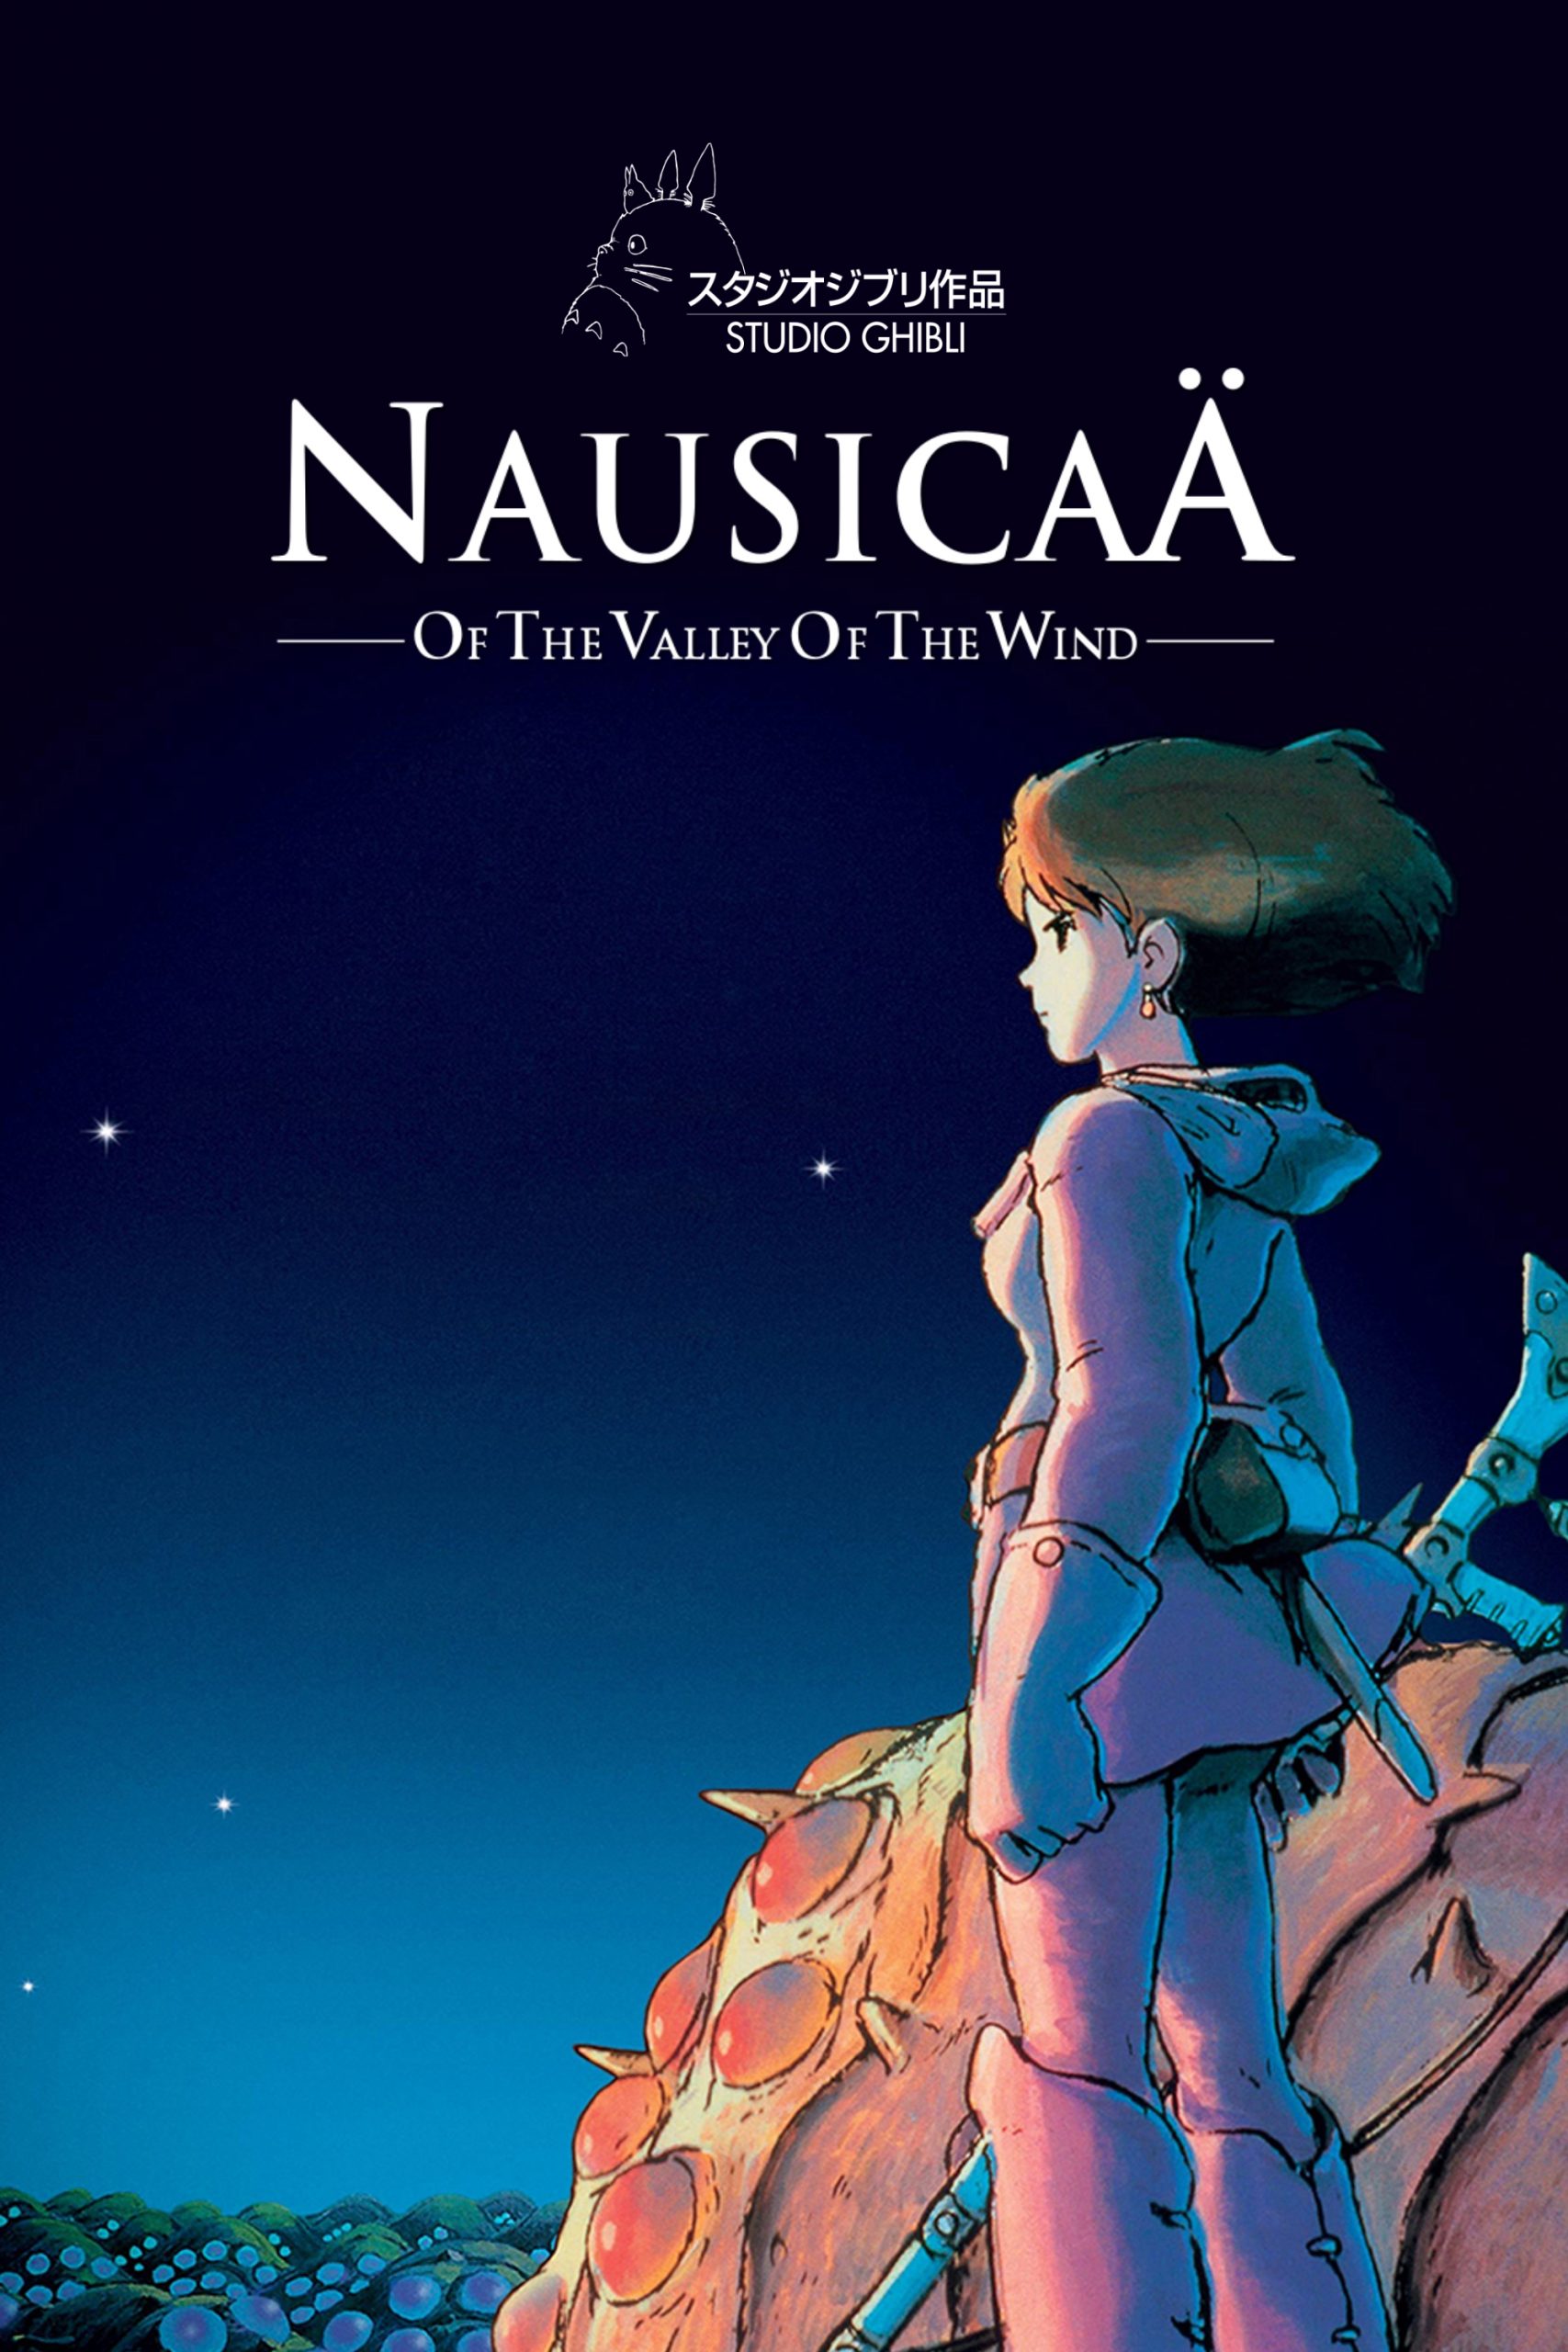 nausicaa-best-japanese-anime-movies - Pop Culture, Entertainment, Humor,  Travel & More